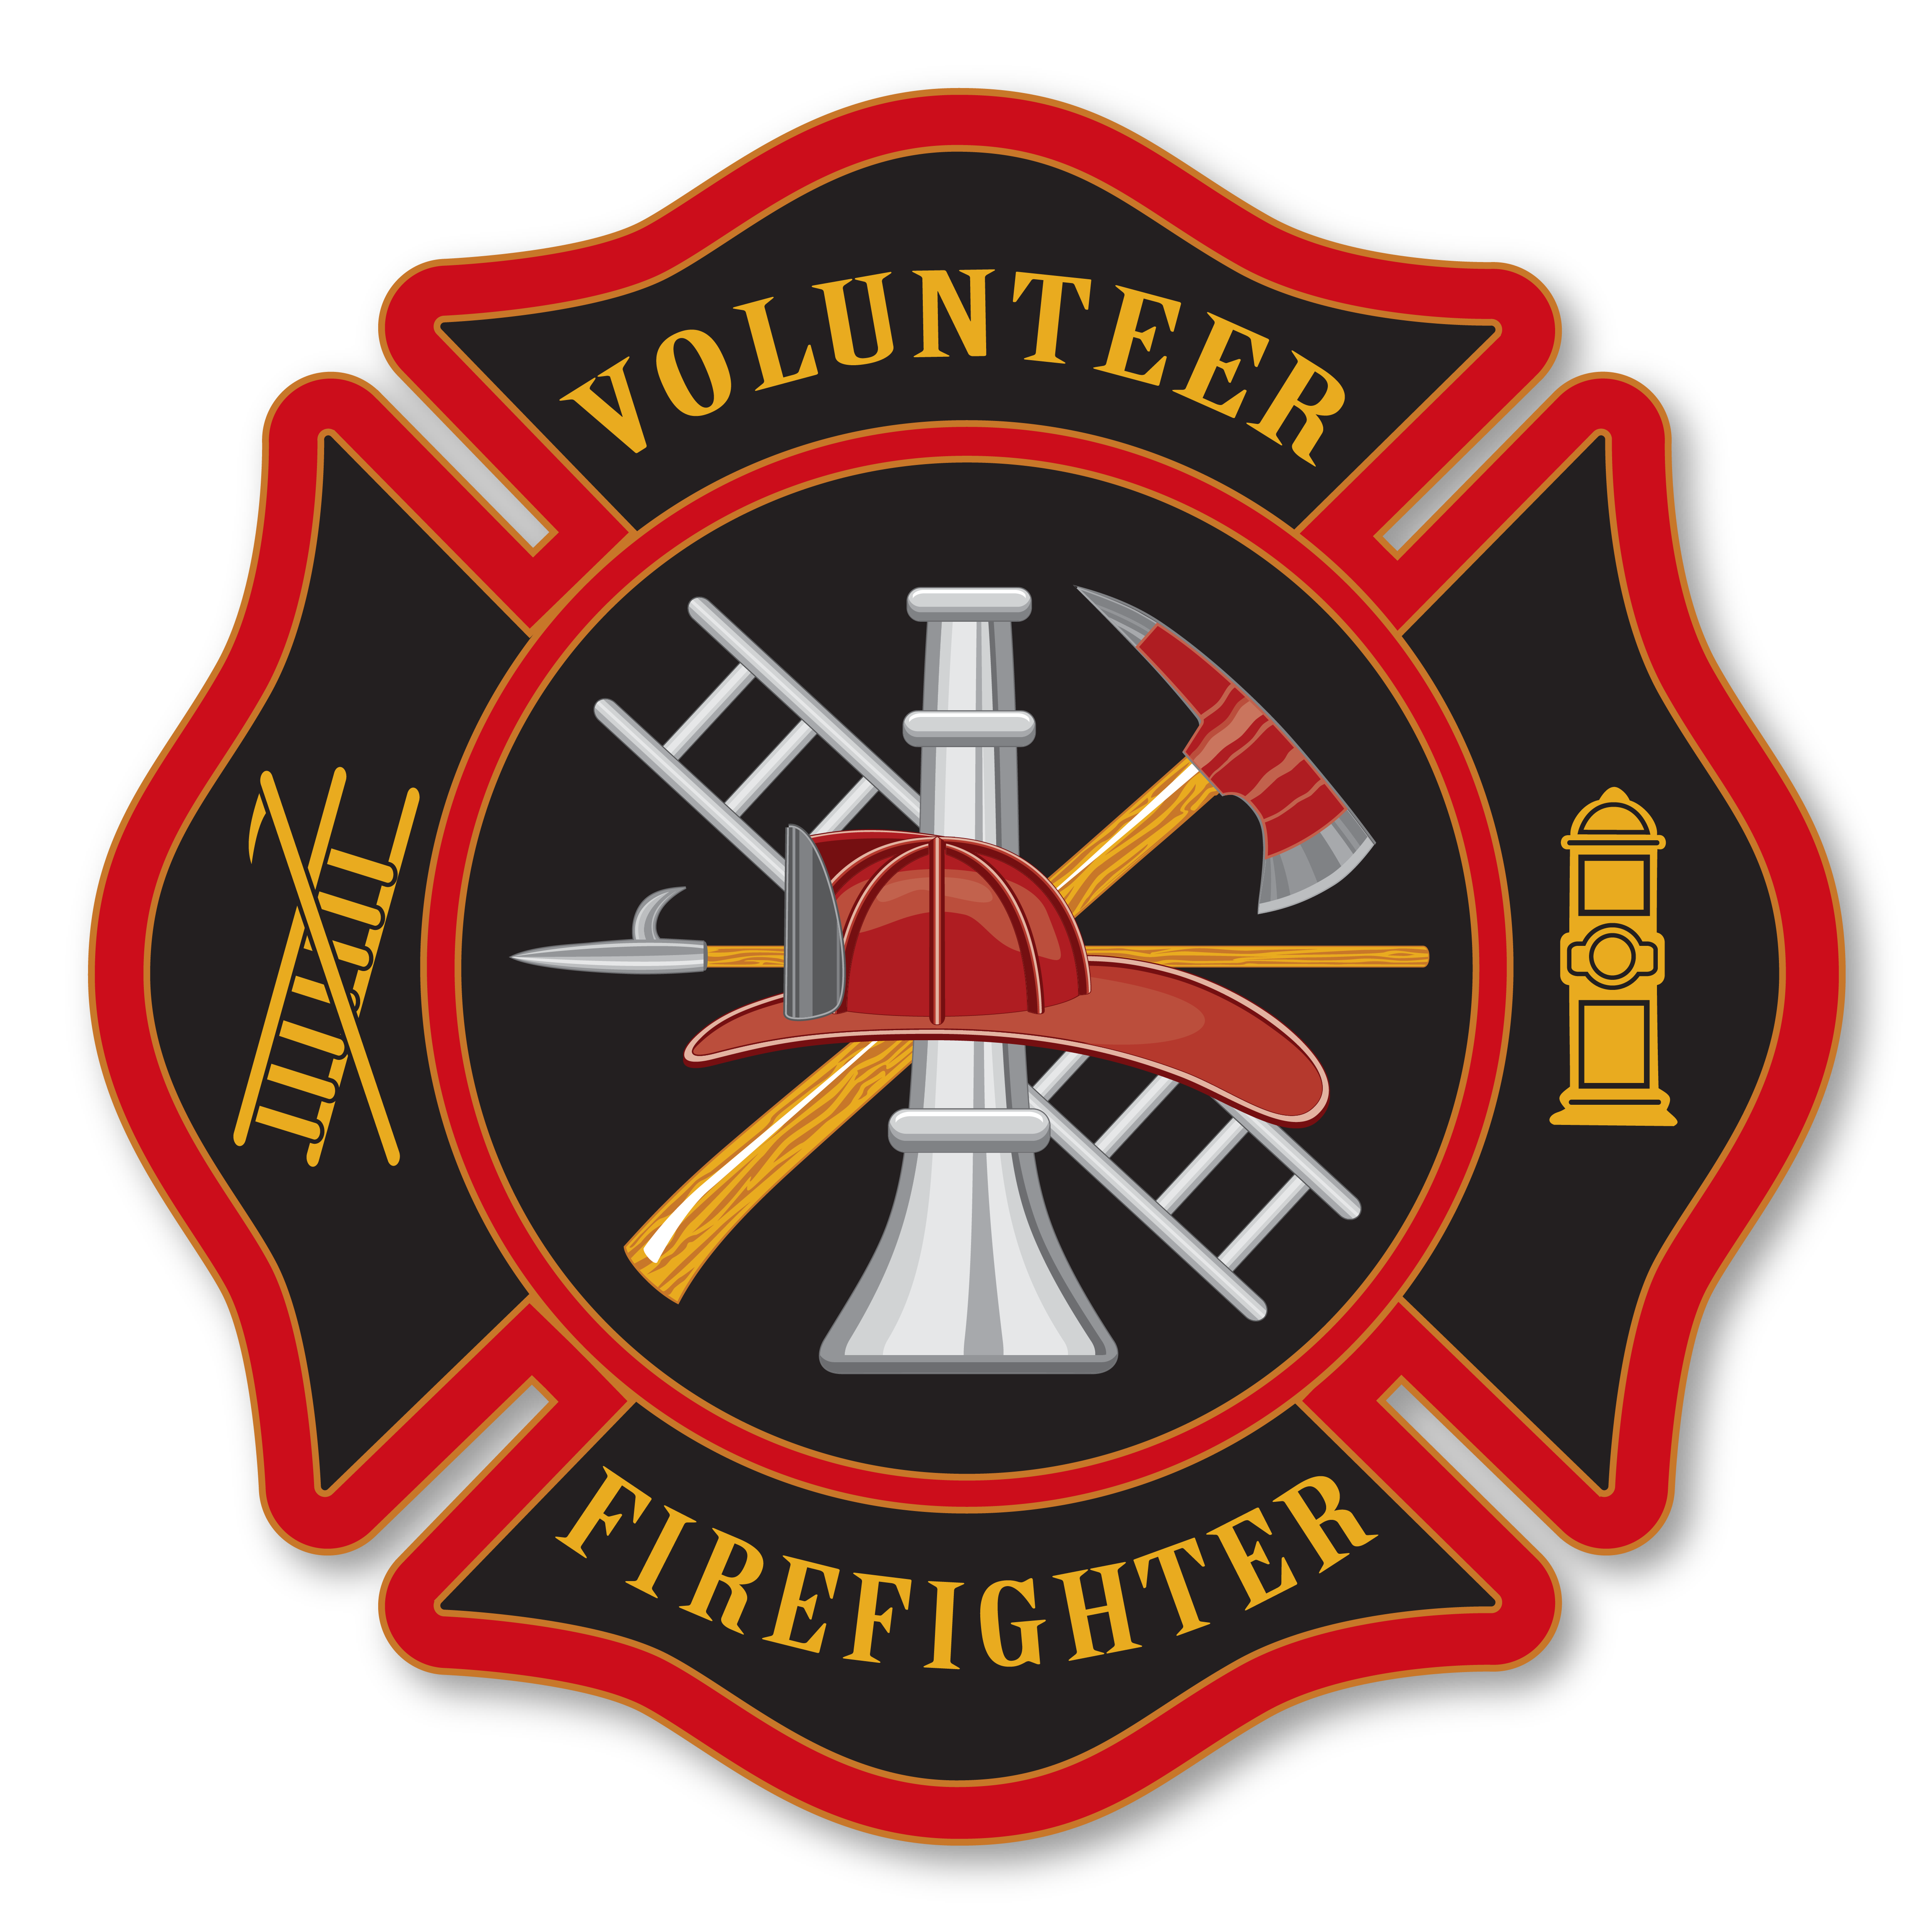 Volunteer Firefighter shield graphic